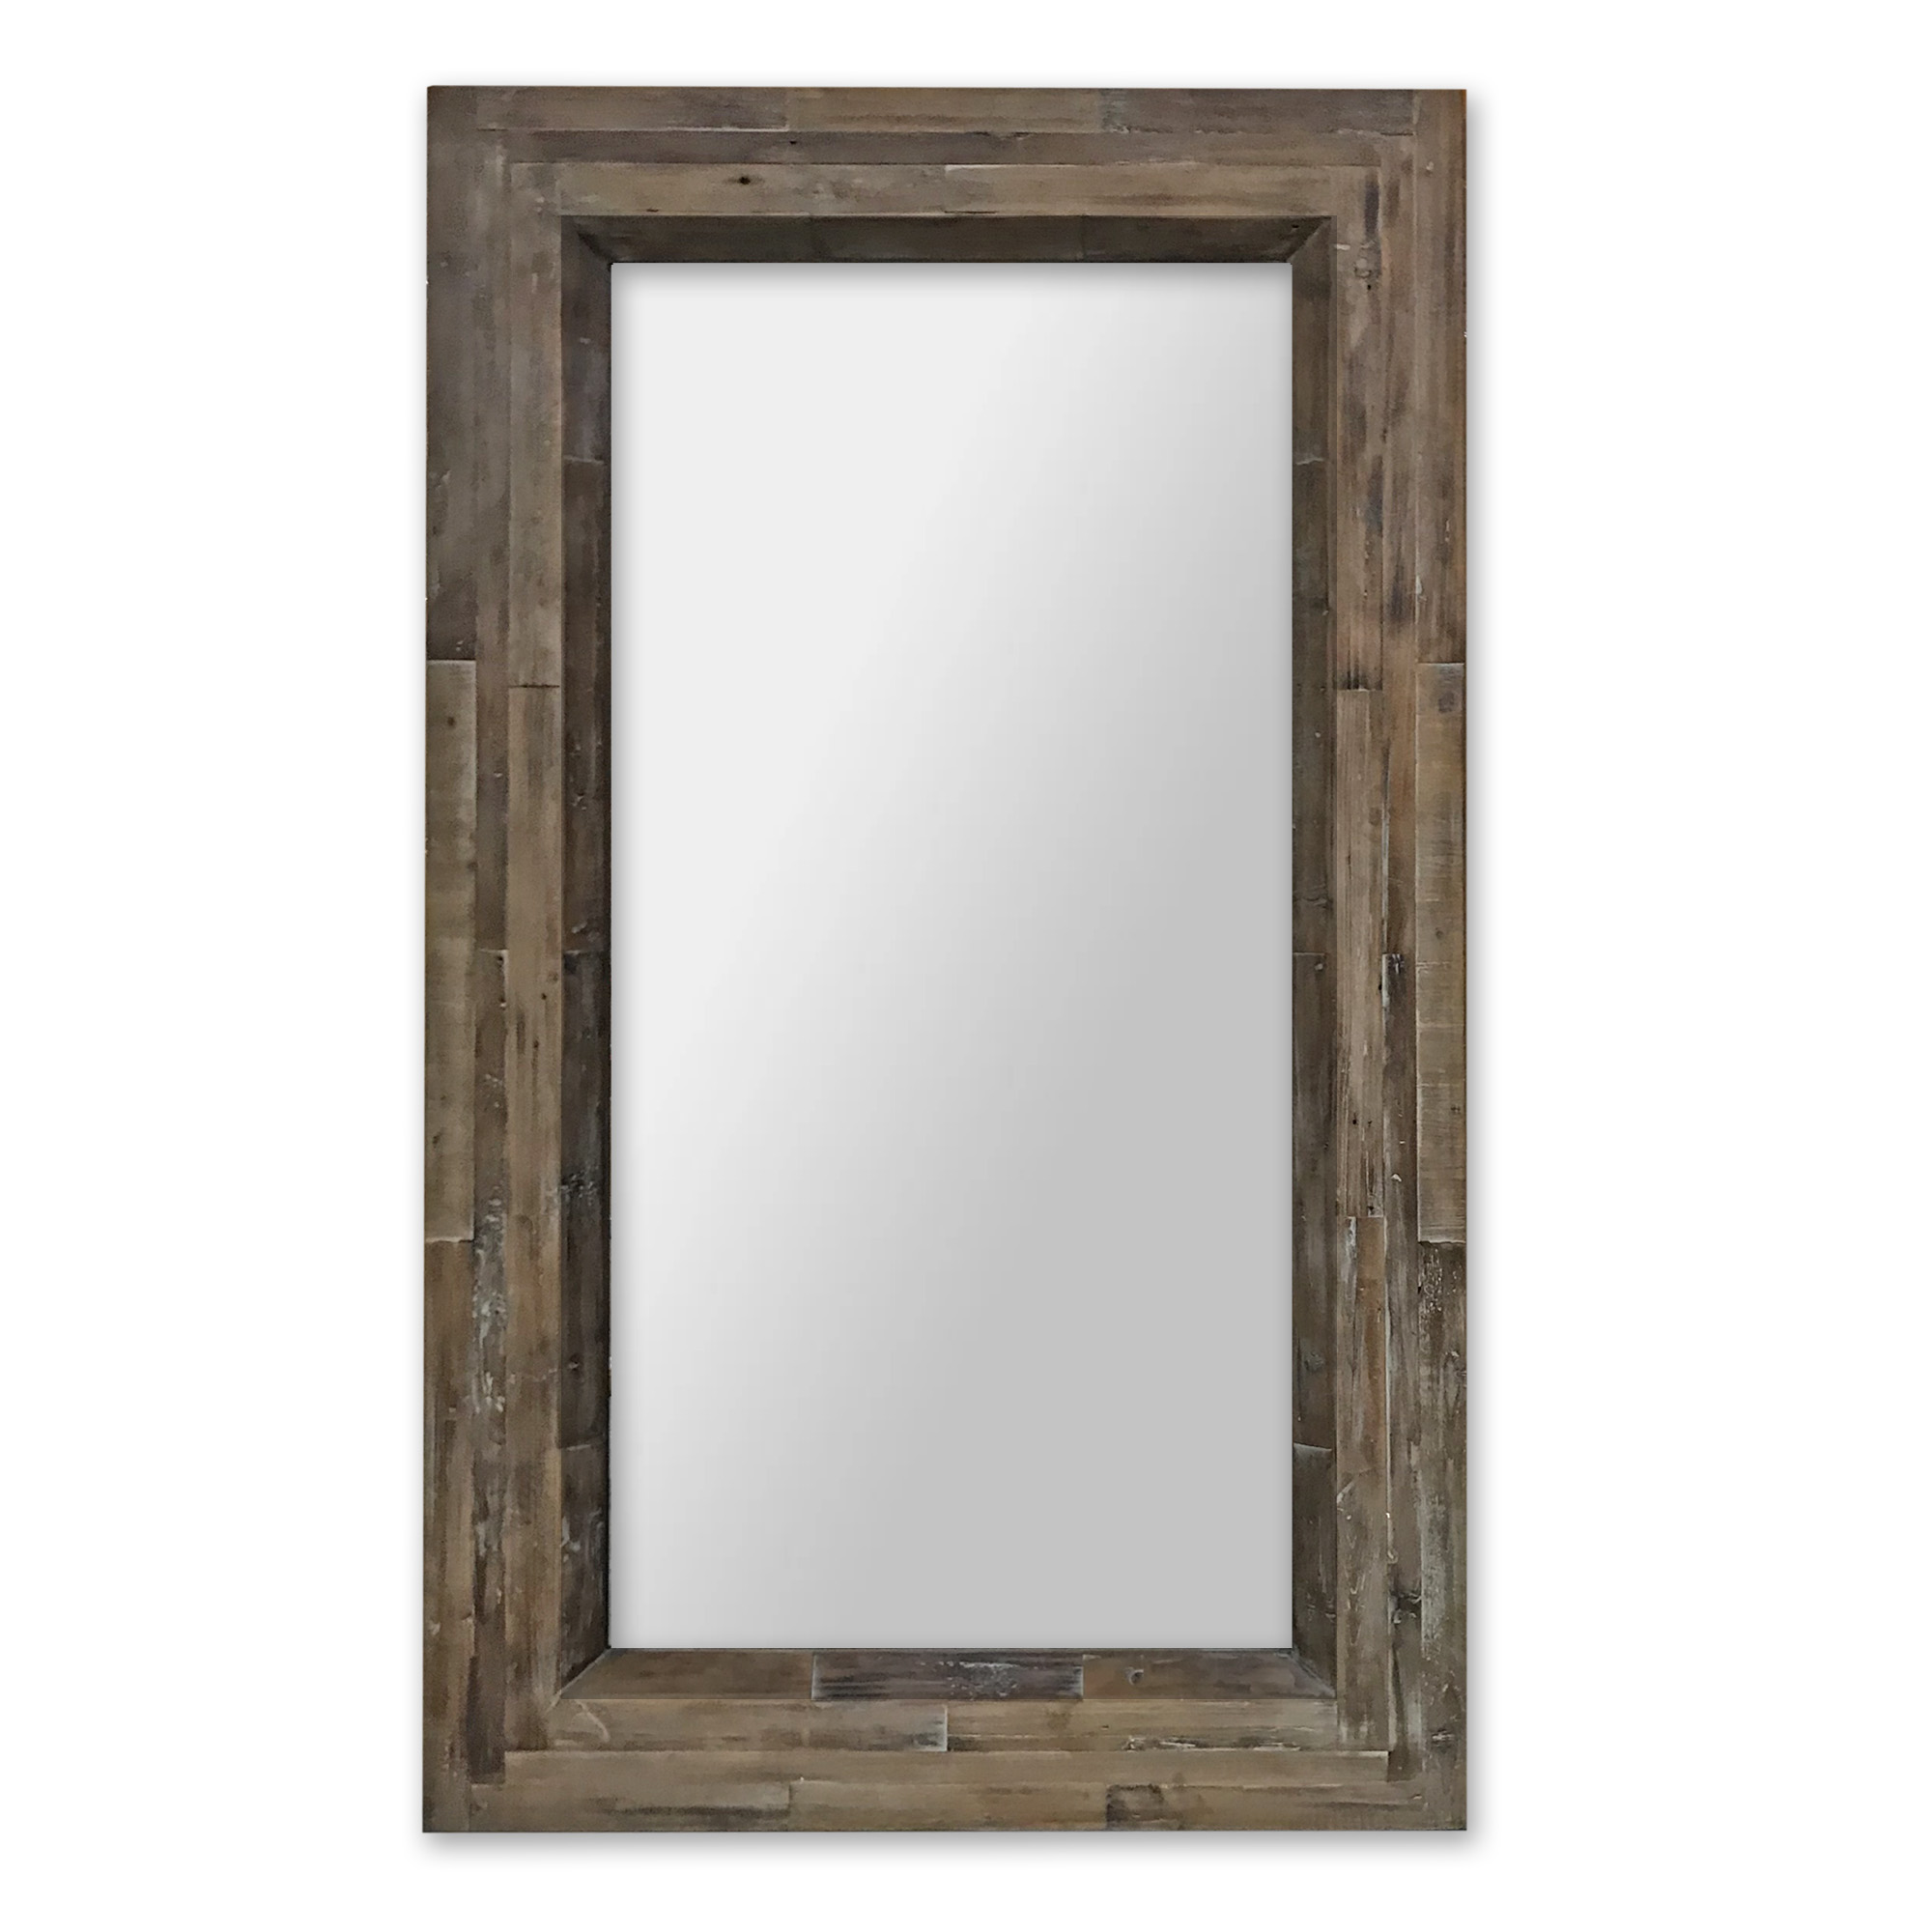 Rectangular Reclaimed Wood Finish Leaning Mirror